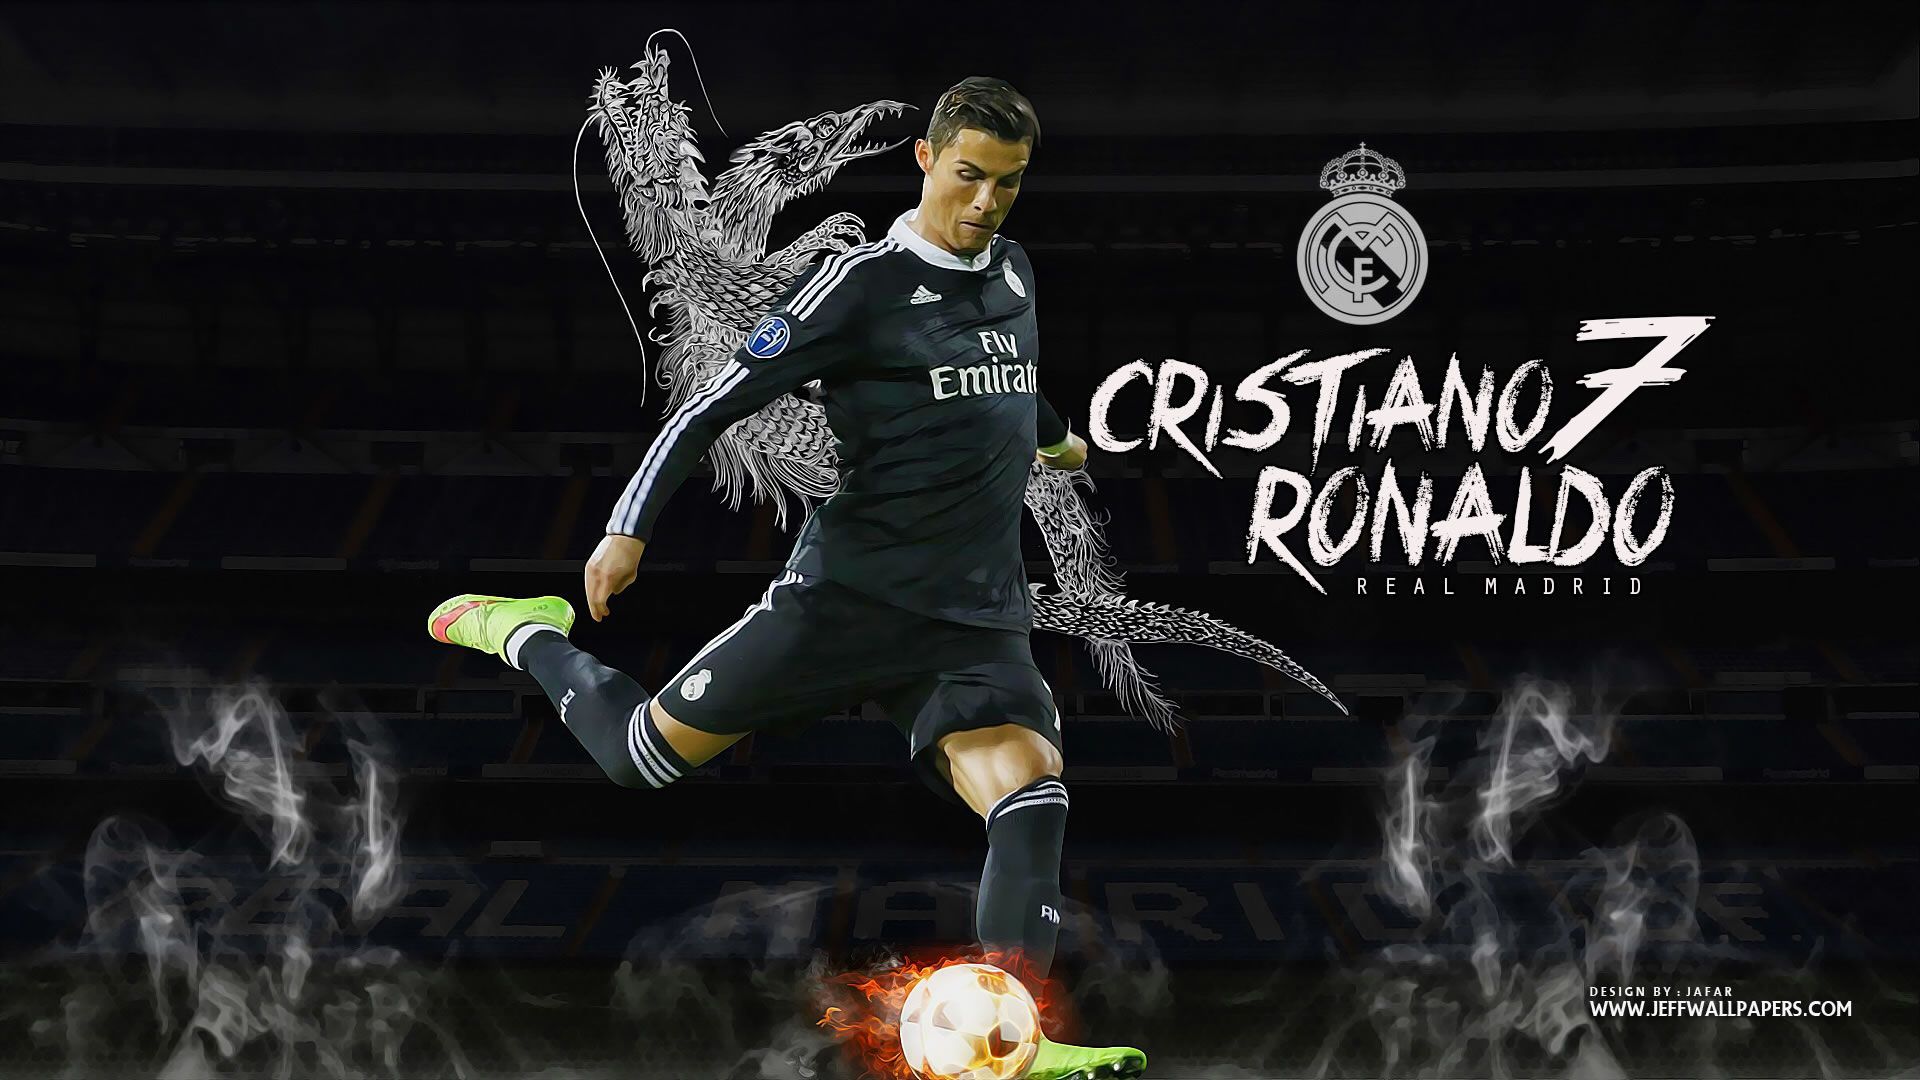 Cristiano Ronaldo Real Madrid wallpaper by Jafarjeef - Cristiano ...